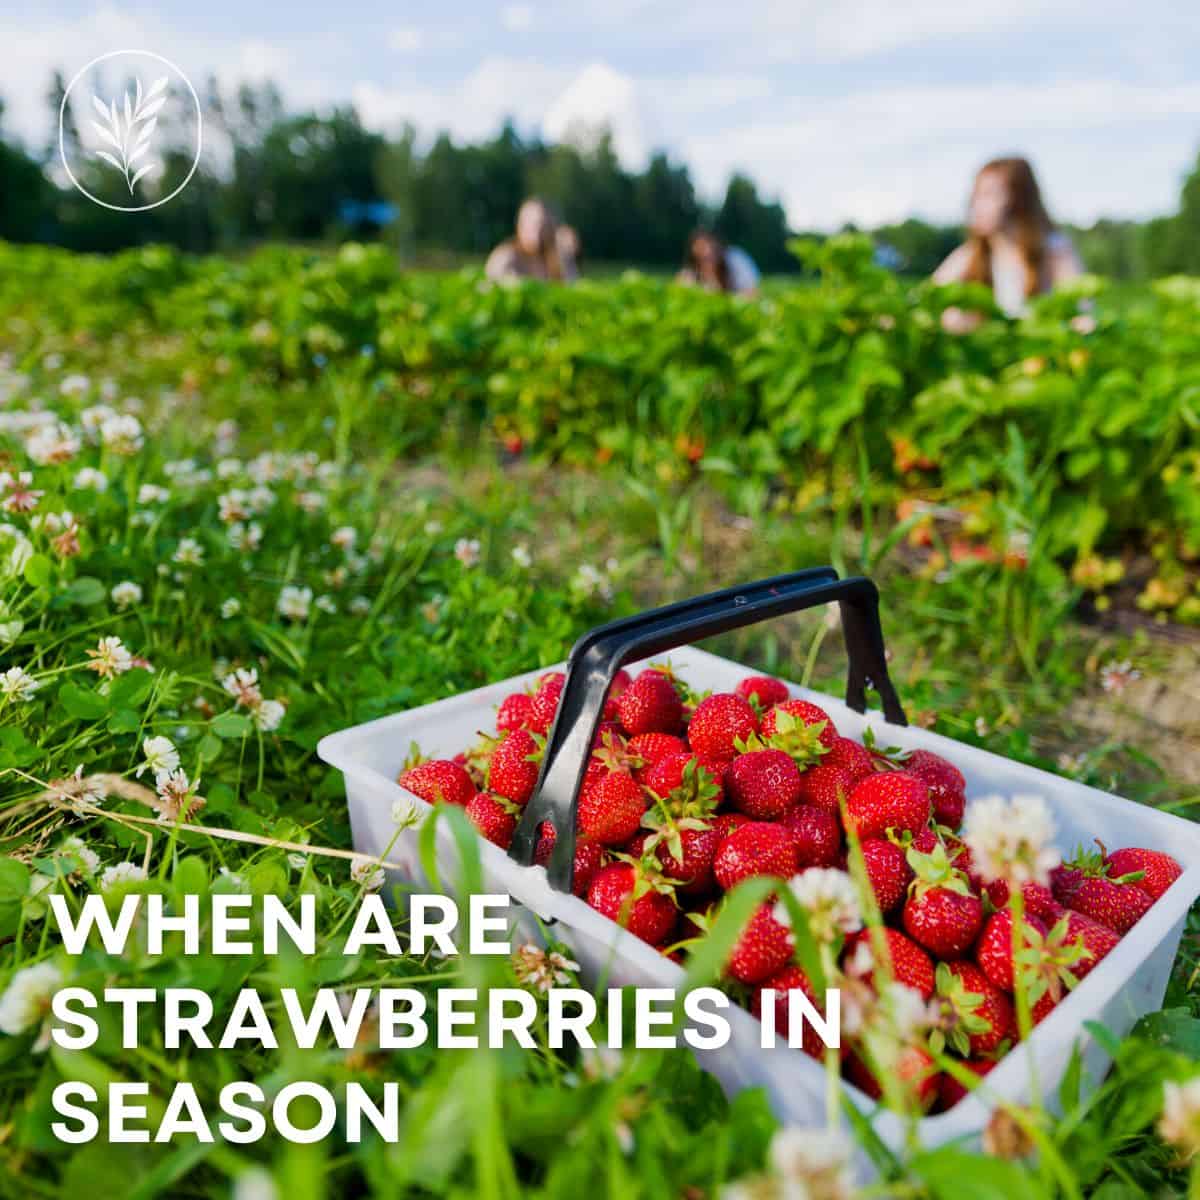 When are strawberries in season via @home4theharvest